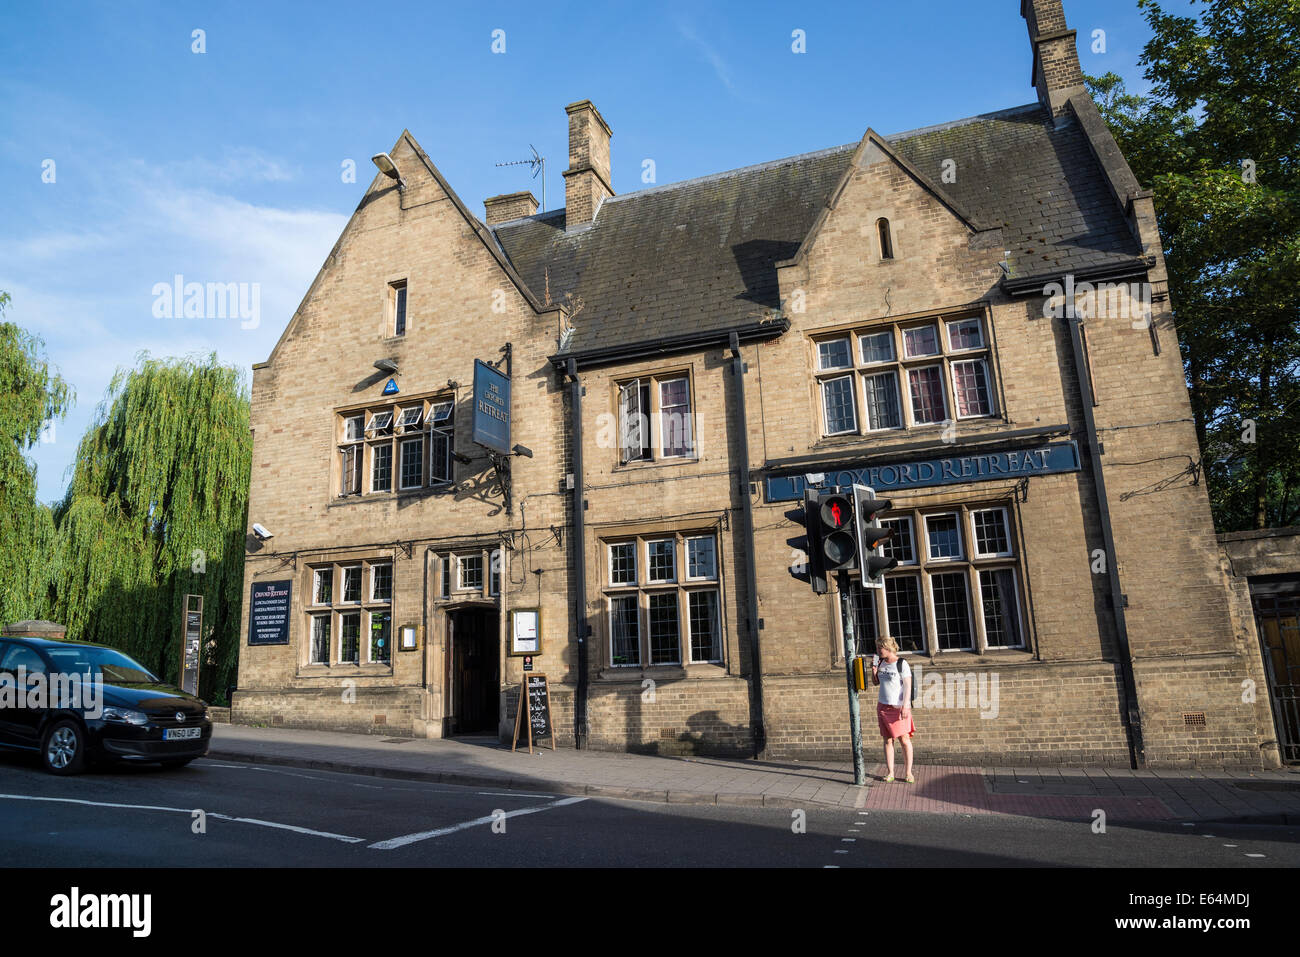 Oxford-Retreat Traditionskneipe, Hythe Bridge Street, Oxford, England, UK Stockfoto